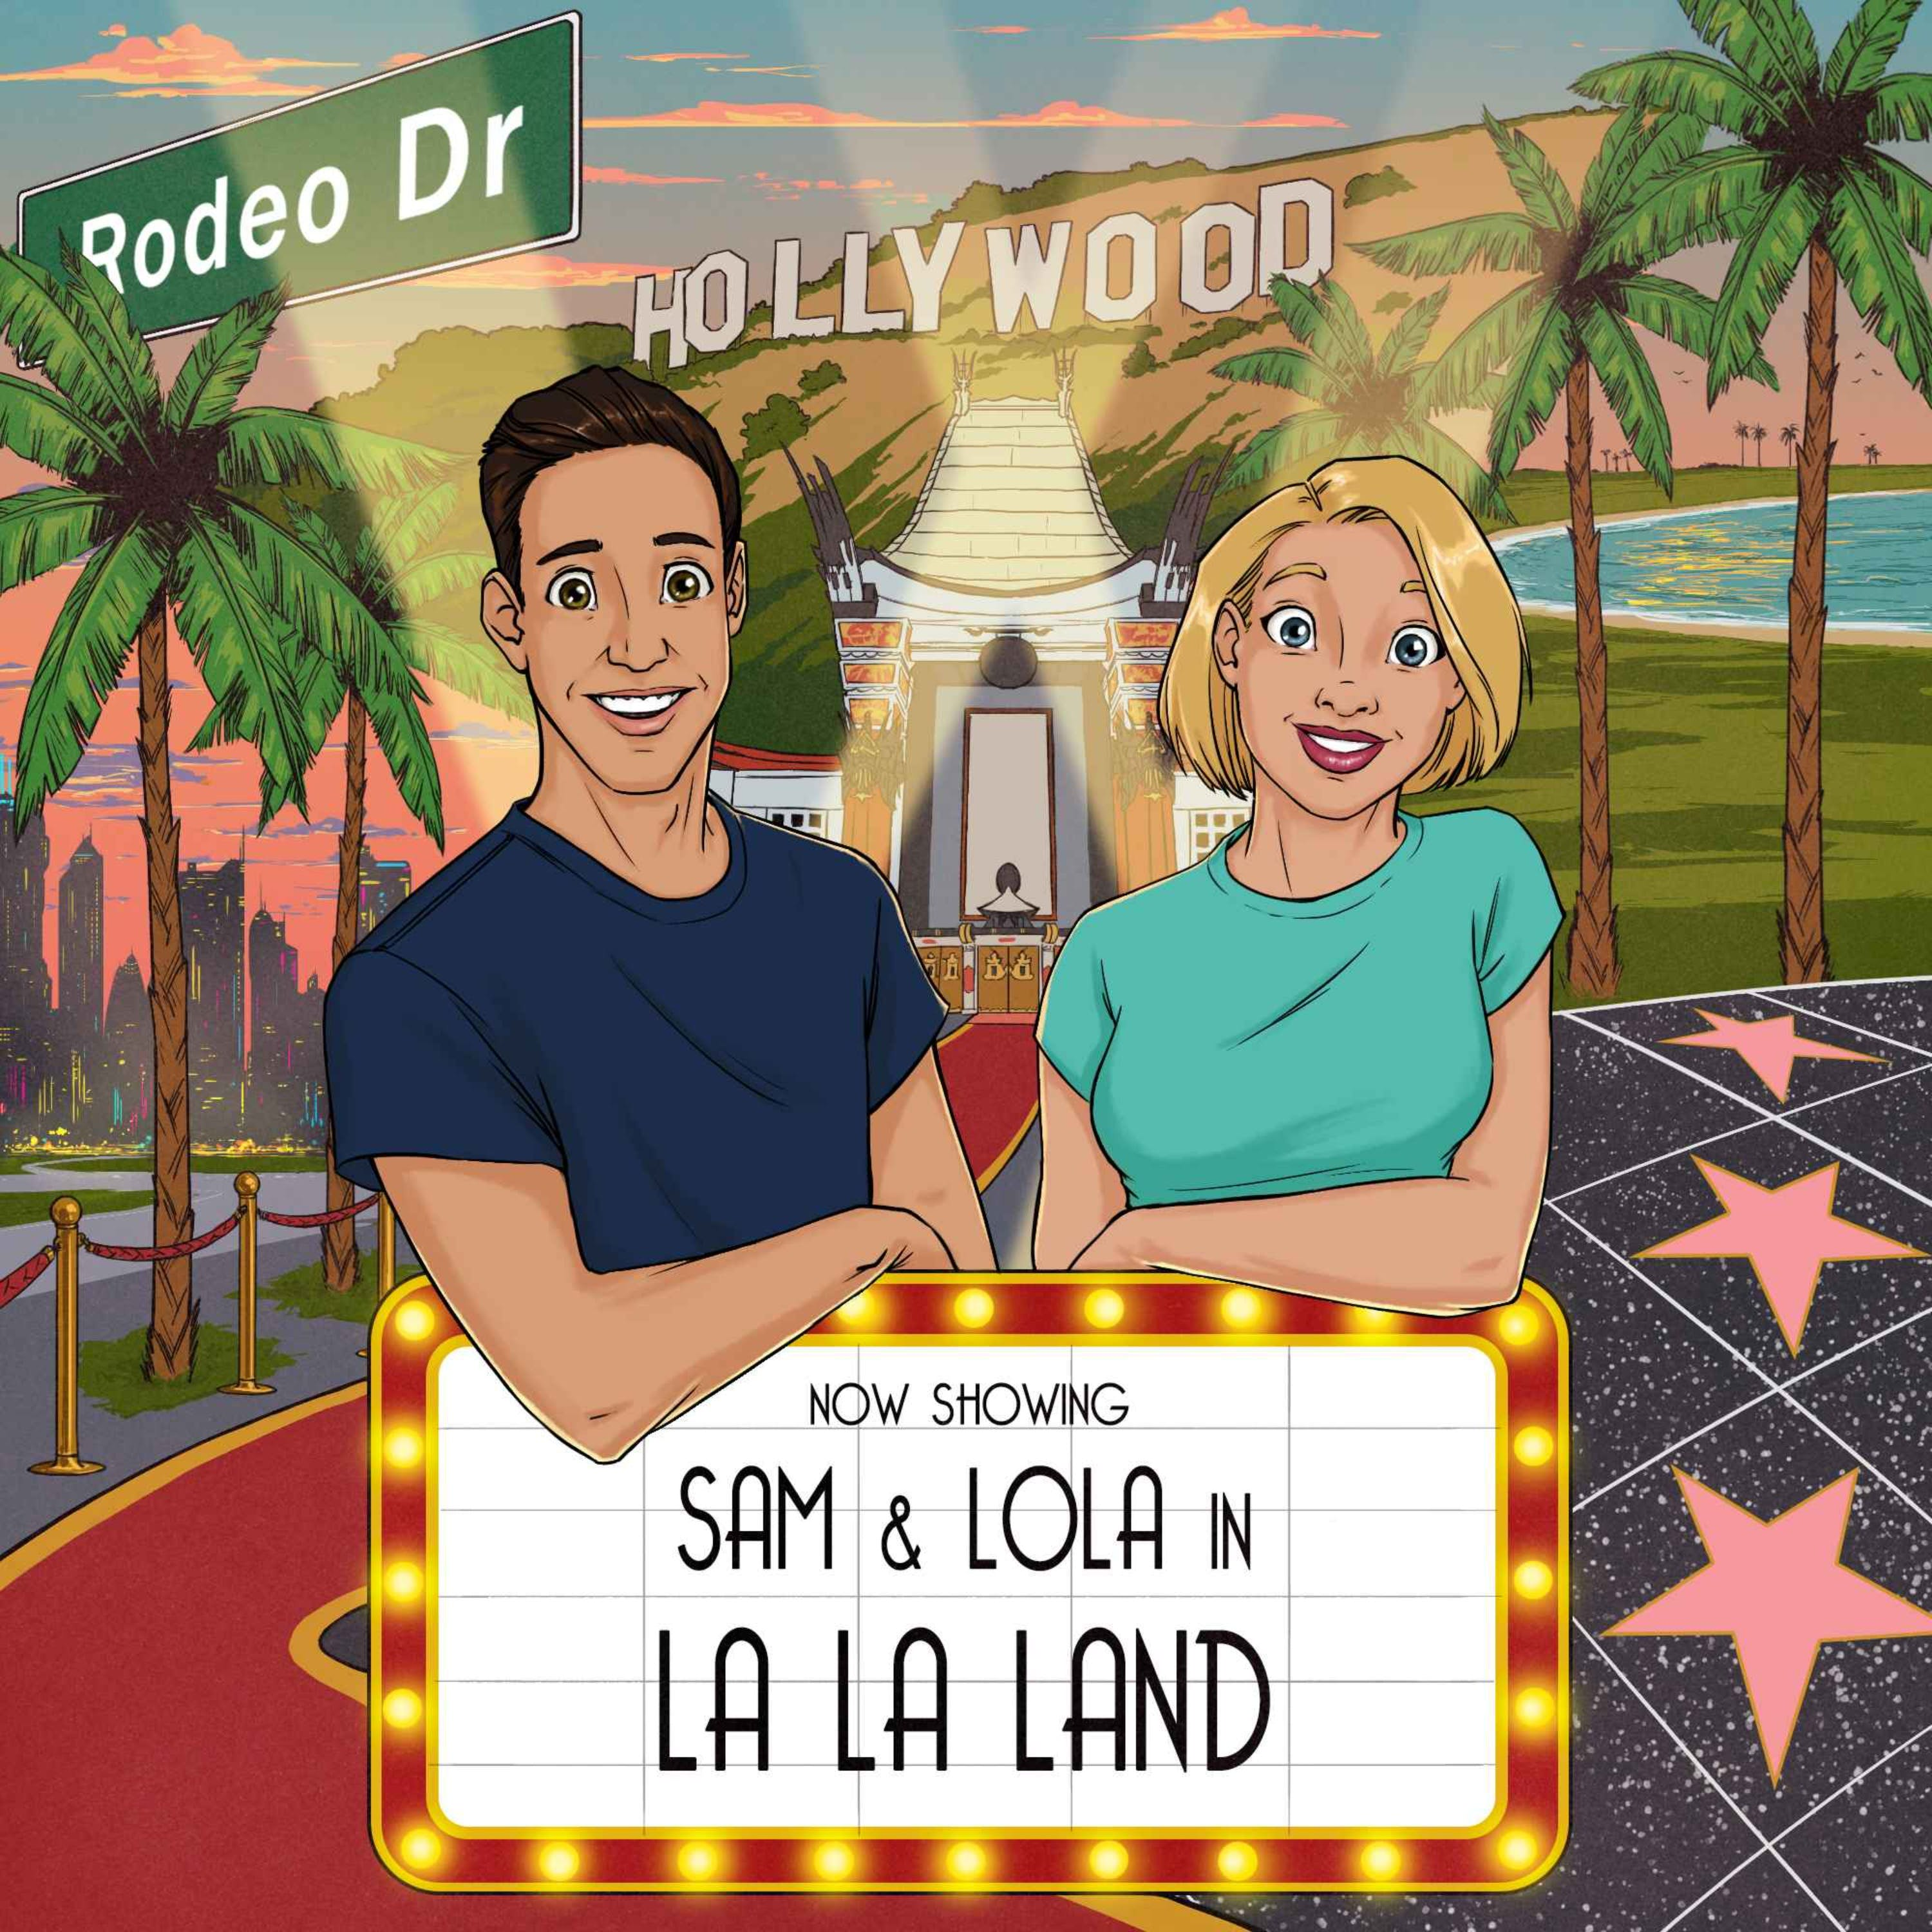 223. Sam & Lola in LA LA LAND: Behind the scenes of the feature film - Senior Year